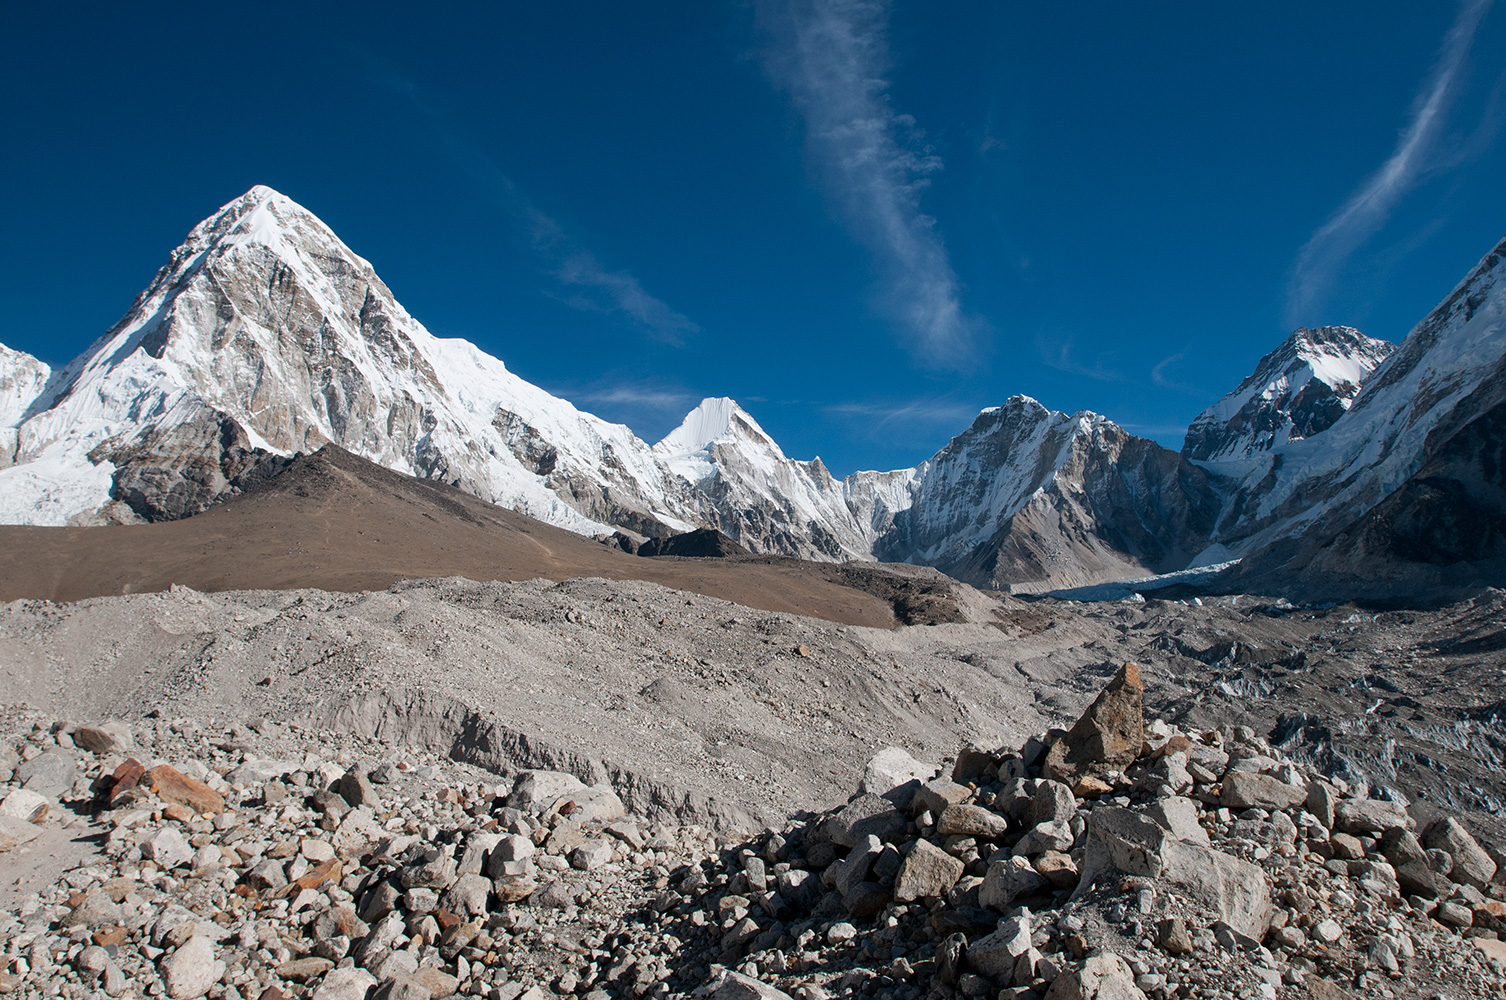 From the Changri Shar glacier below Gorak Shep, with Lingtren, Khumbutse & the Lho La (pass into Tibet) also visibleNikon D300, 17-35mm